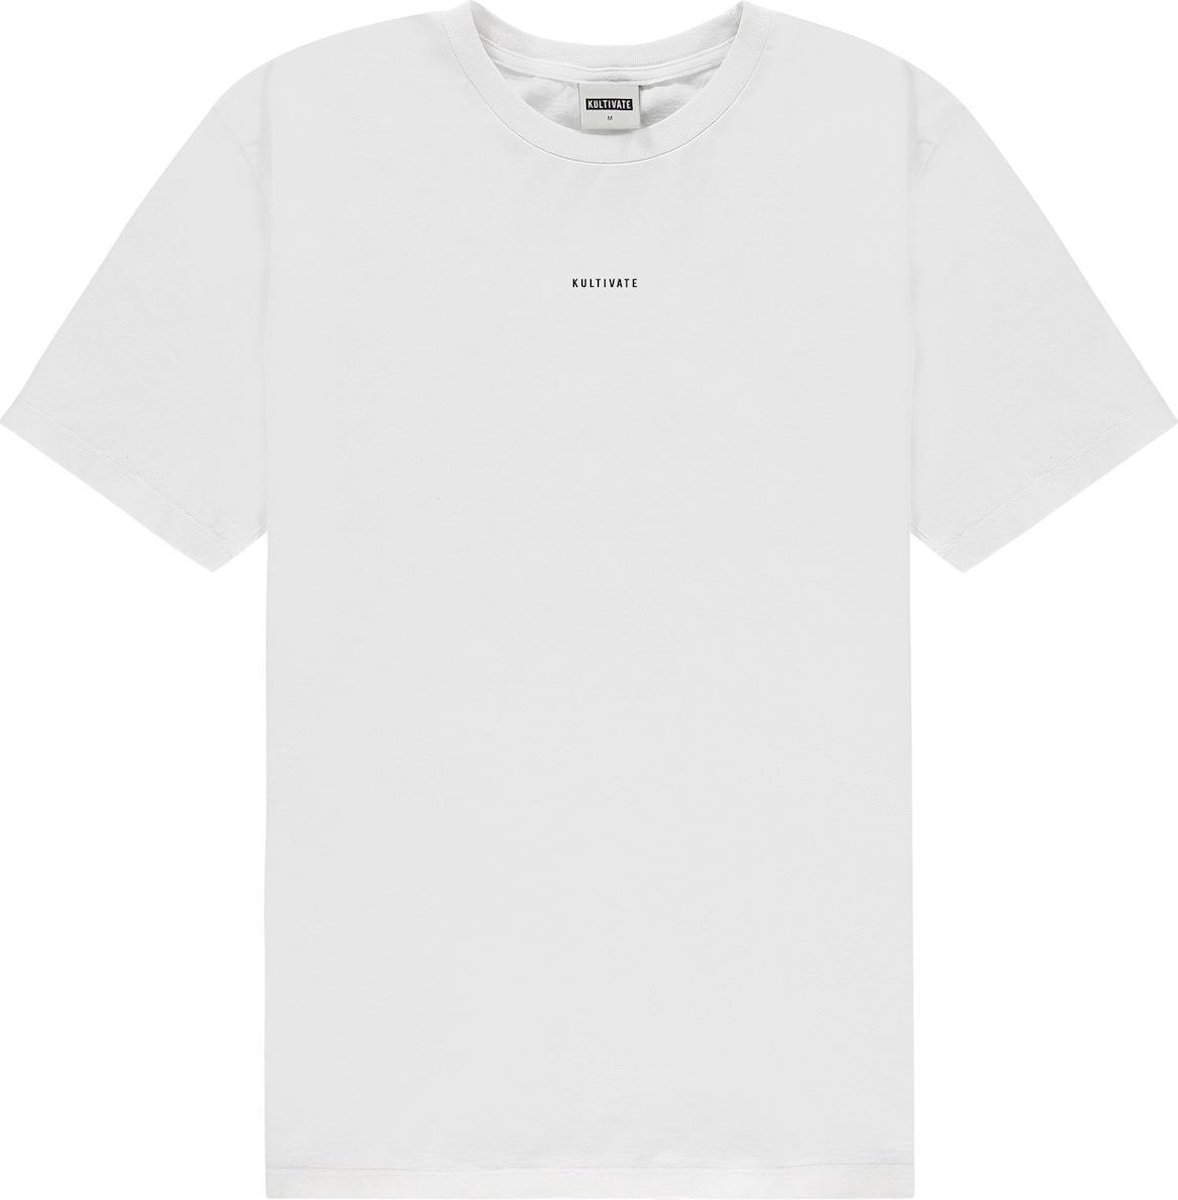 T-shirt Wit (2101010206 - 200-White)